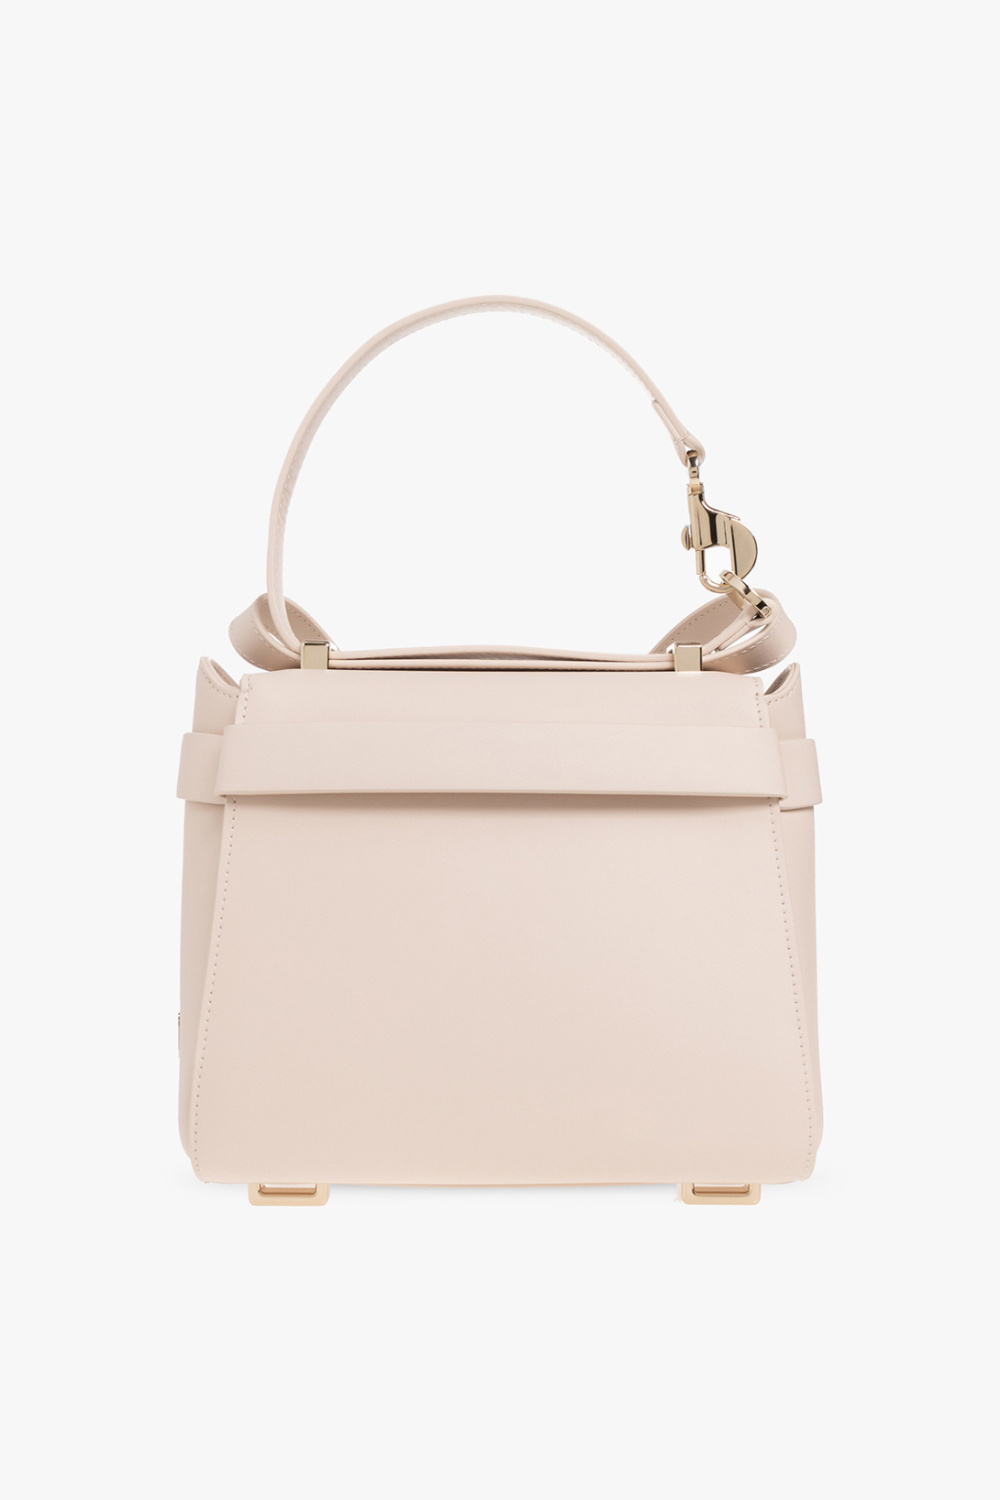 Chloé ‘Nacha Small’ shoulder bag